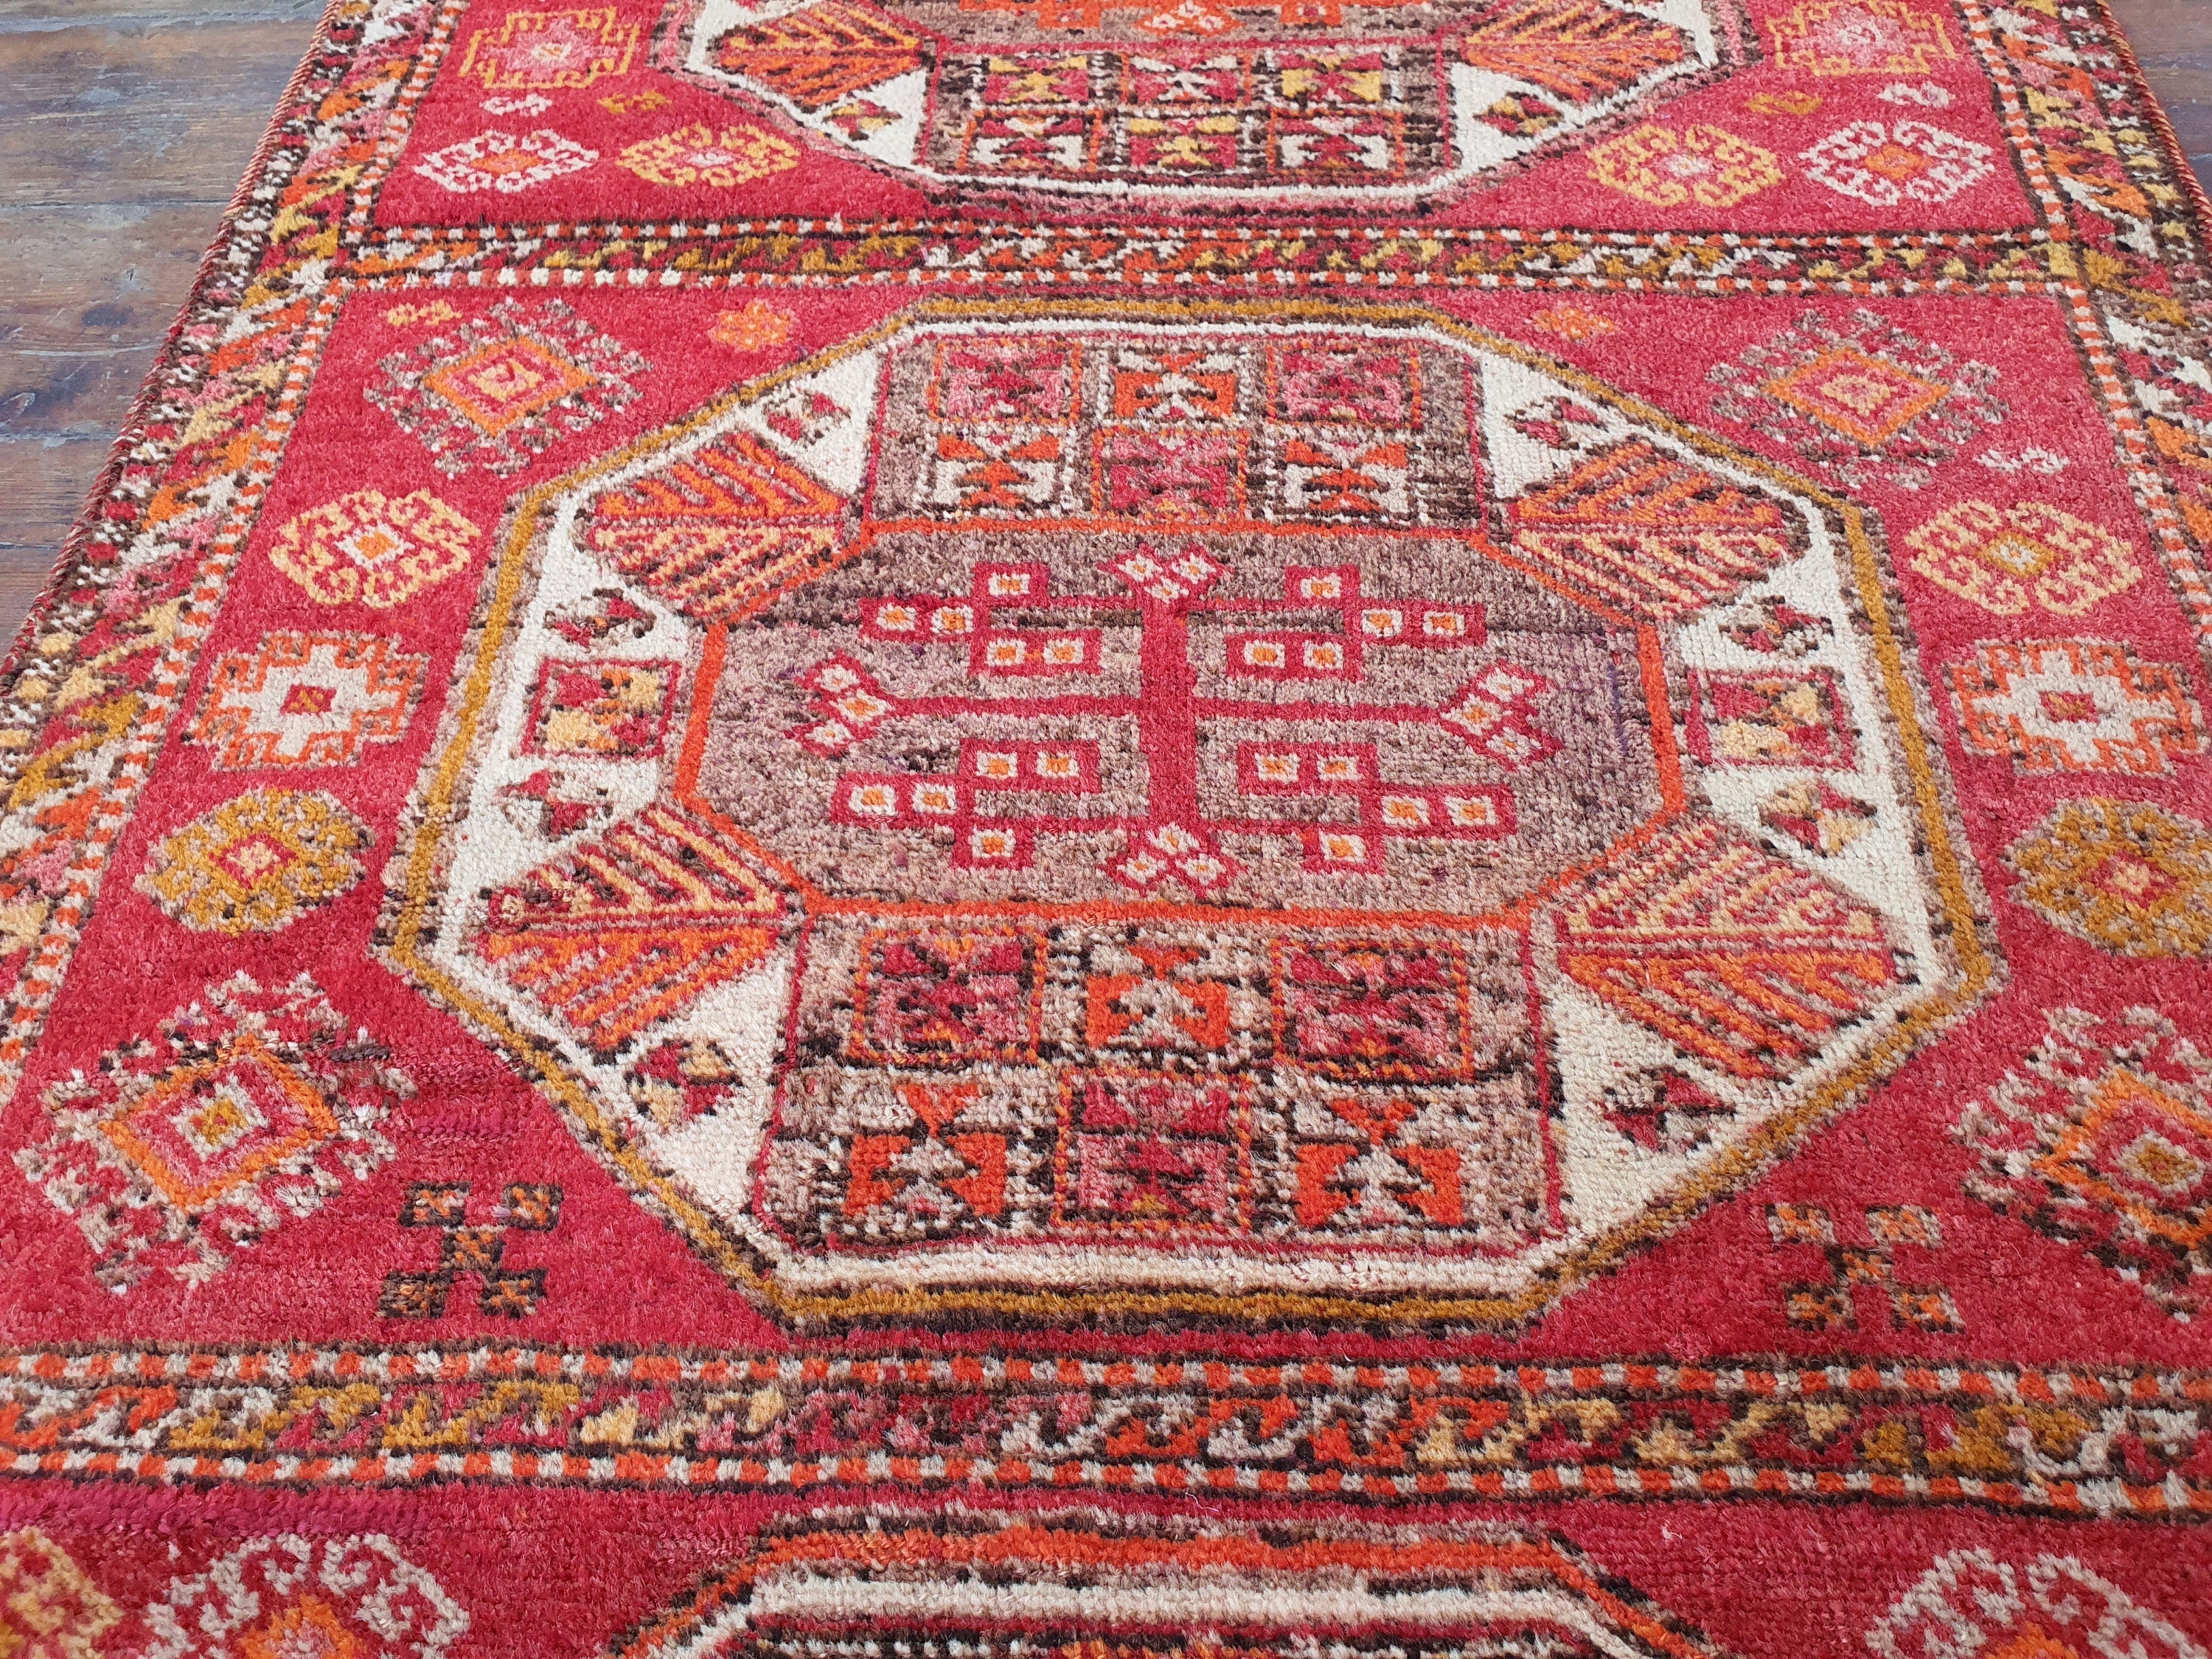 Antique Persian Tribal Runner Rug  6 ft x 2 ft Orange Red Brown Hallway or Corridor Rug